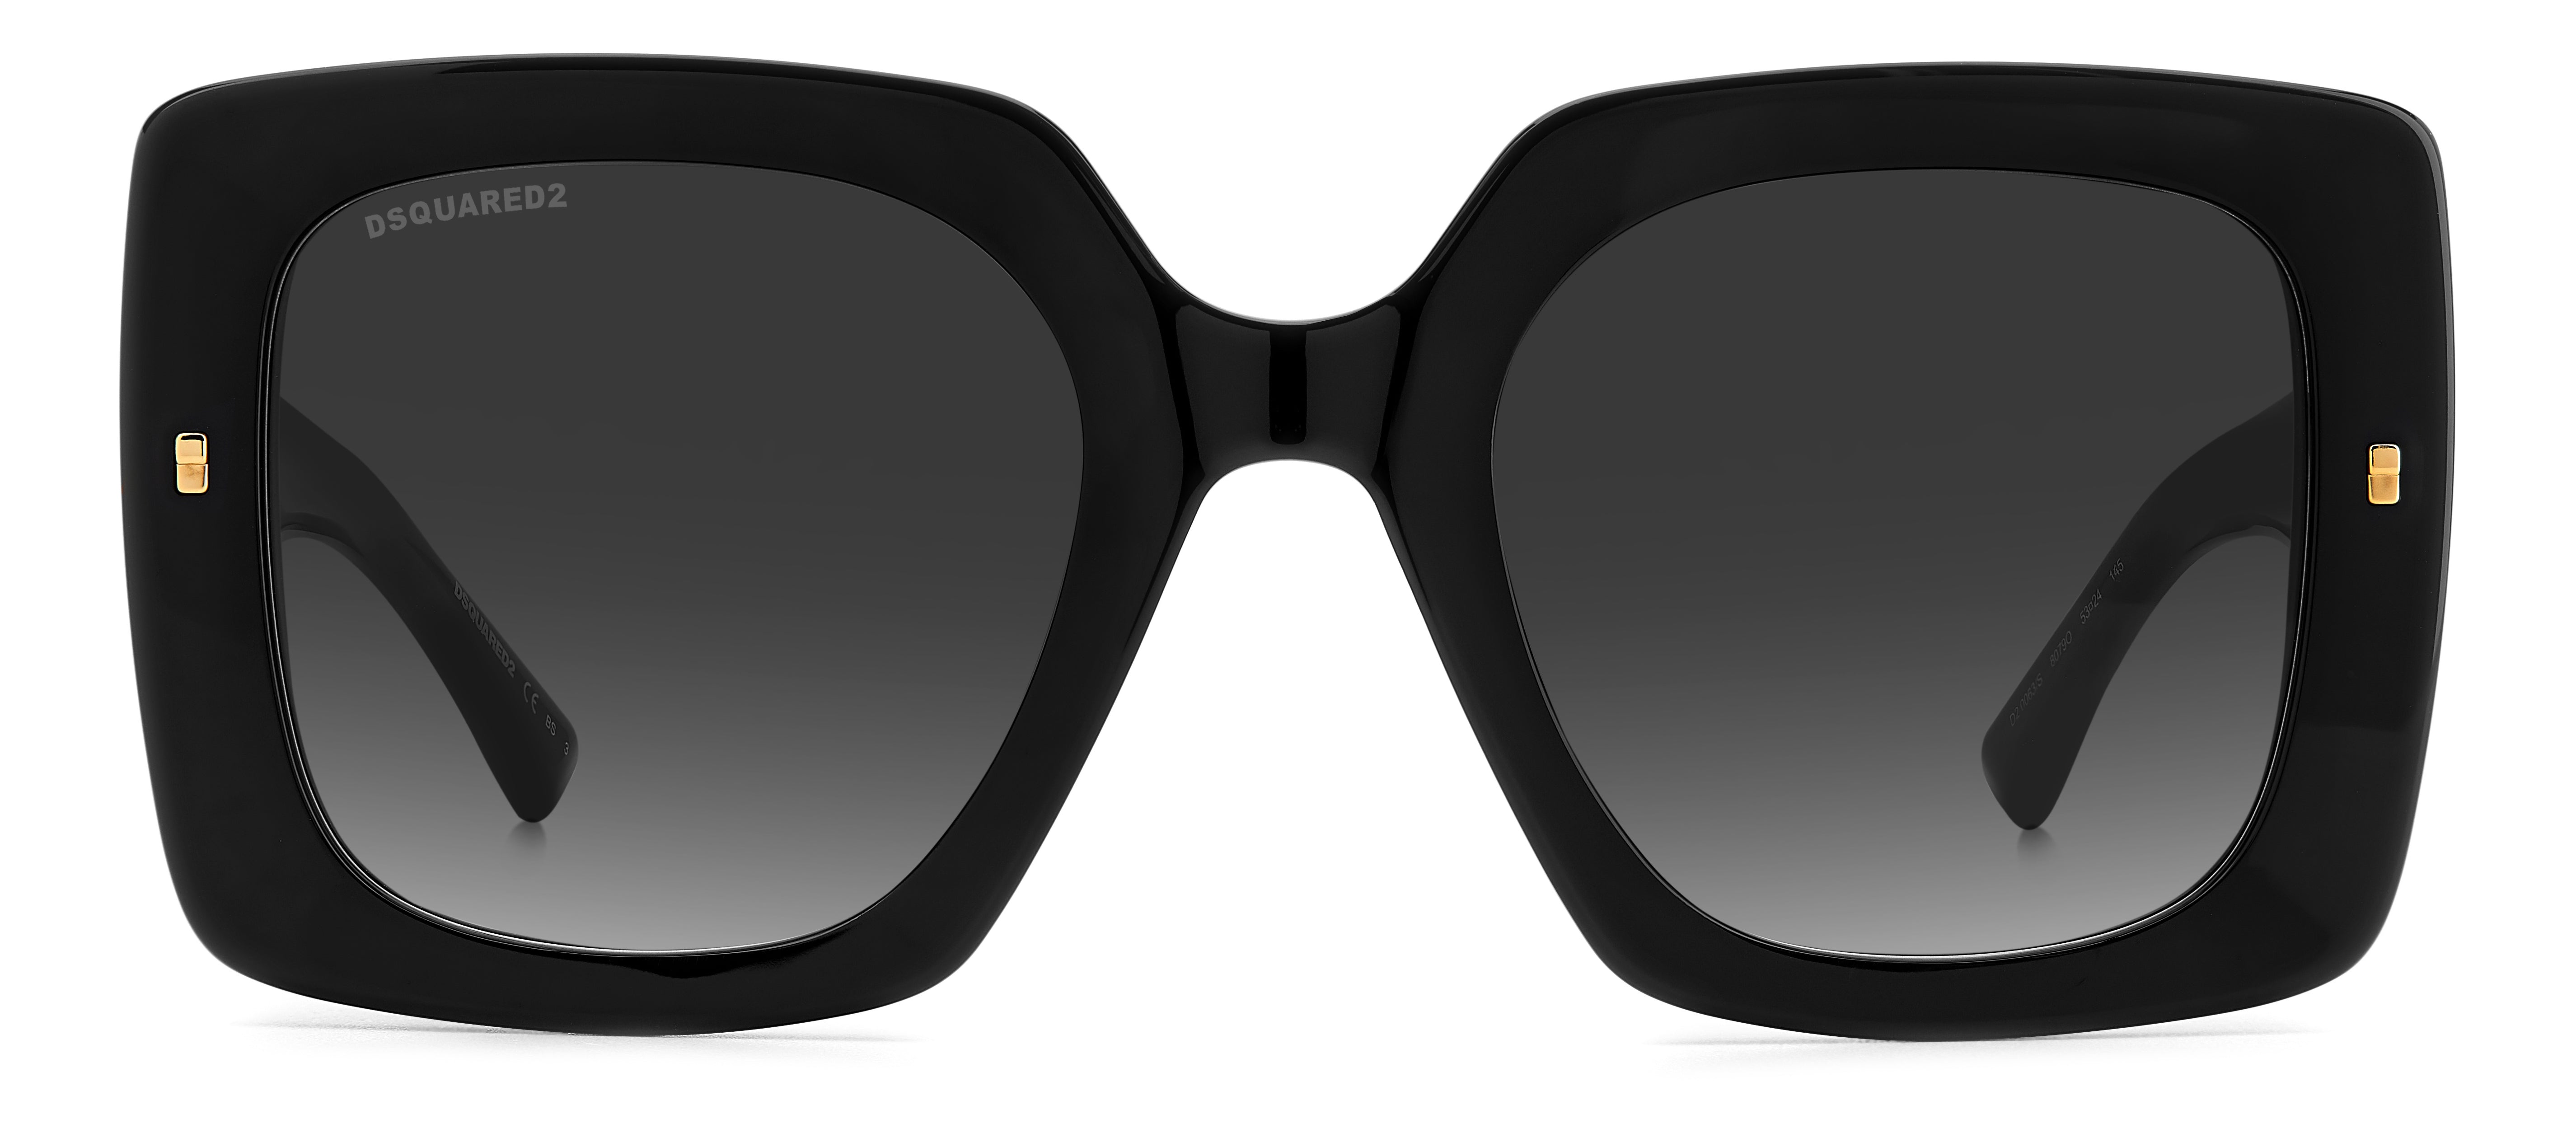 Dsquared2 Over-Sized Square Sunglasses